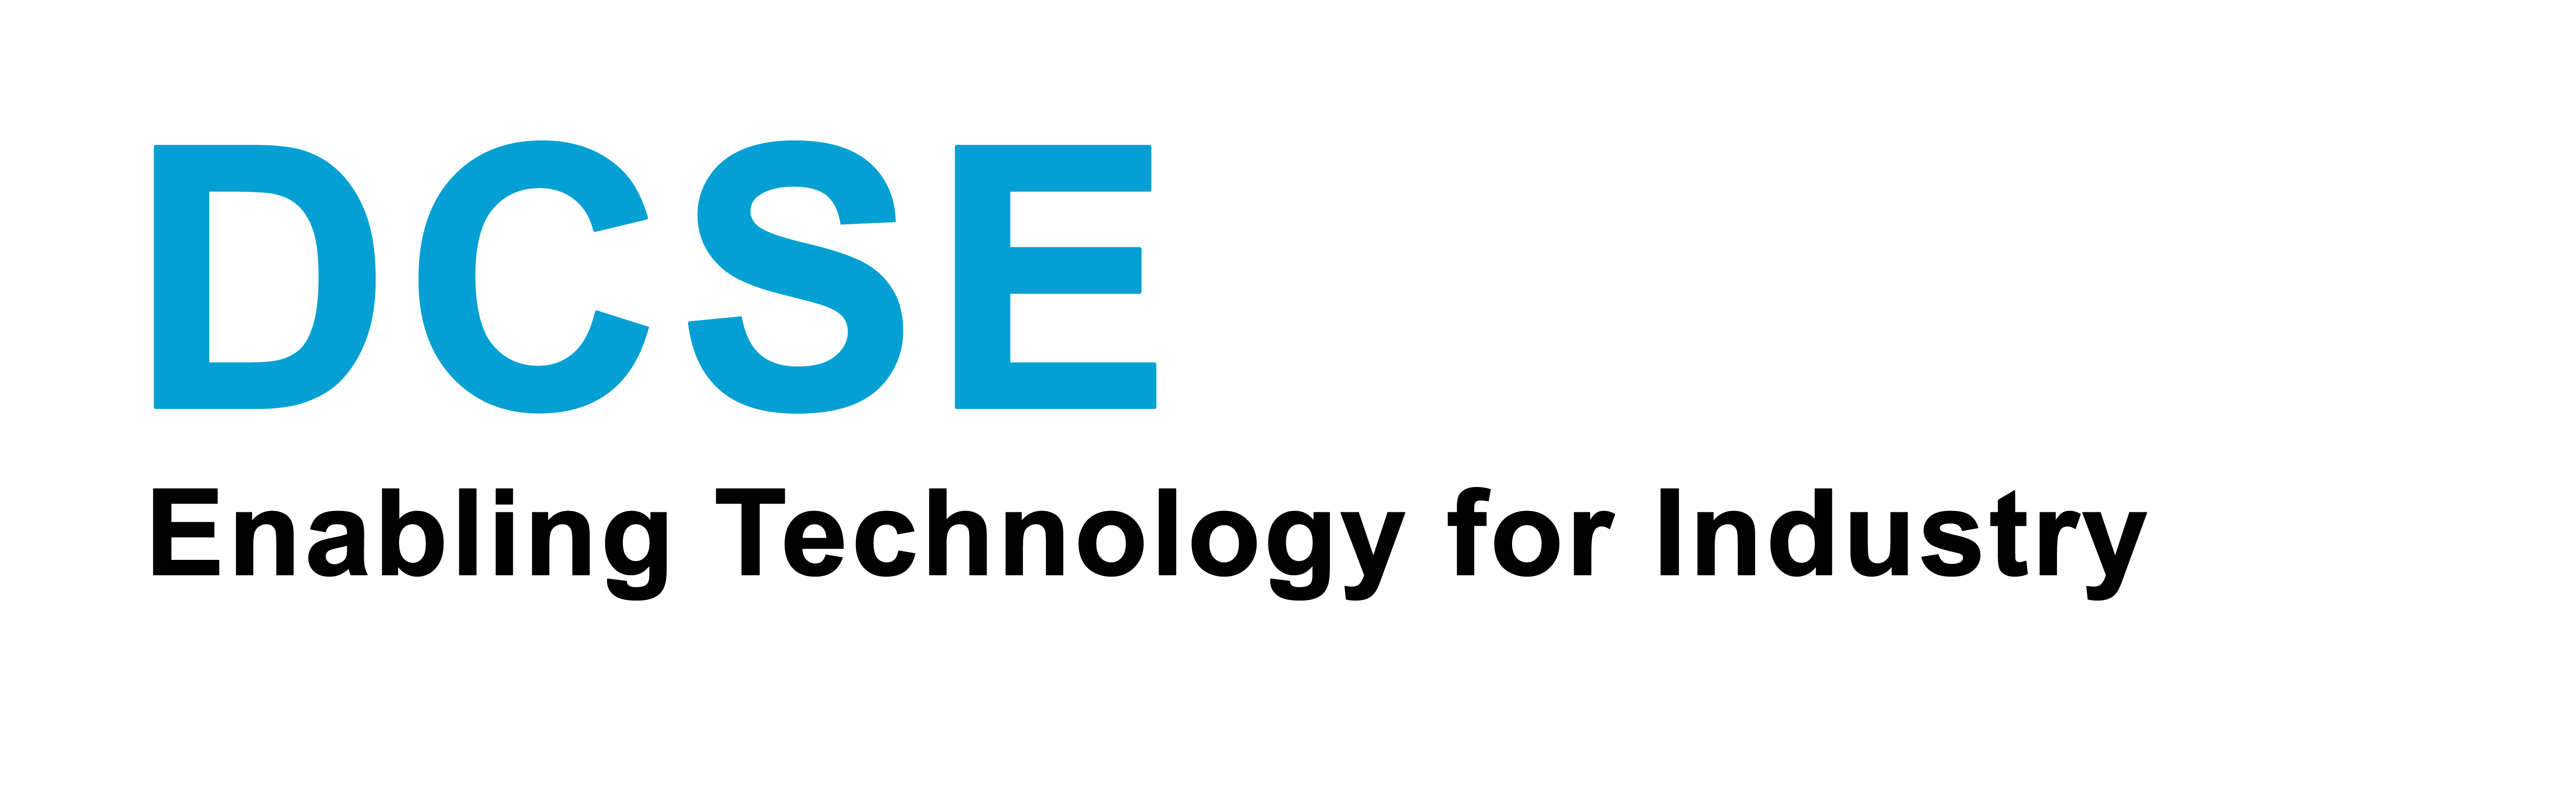 DCSE logo bold